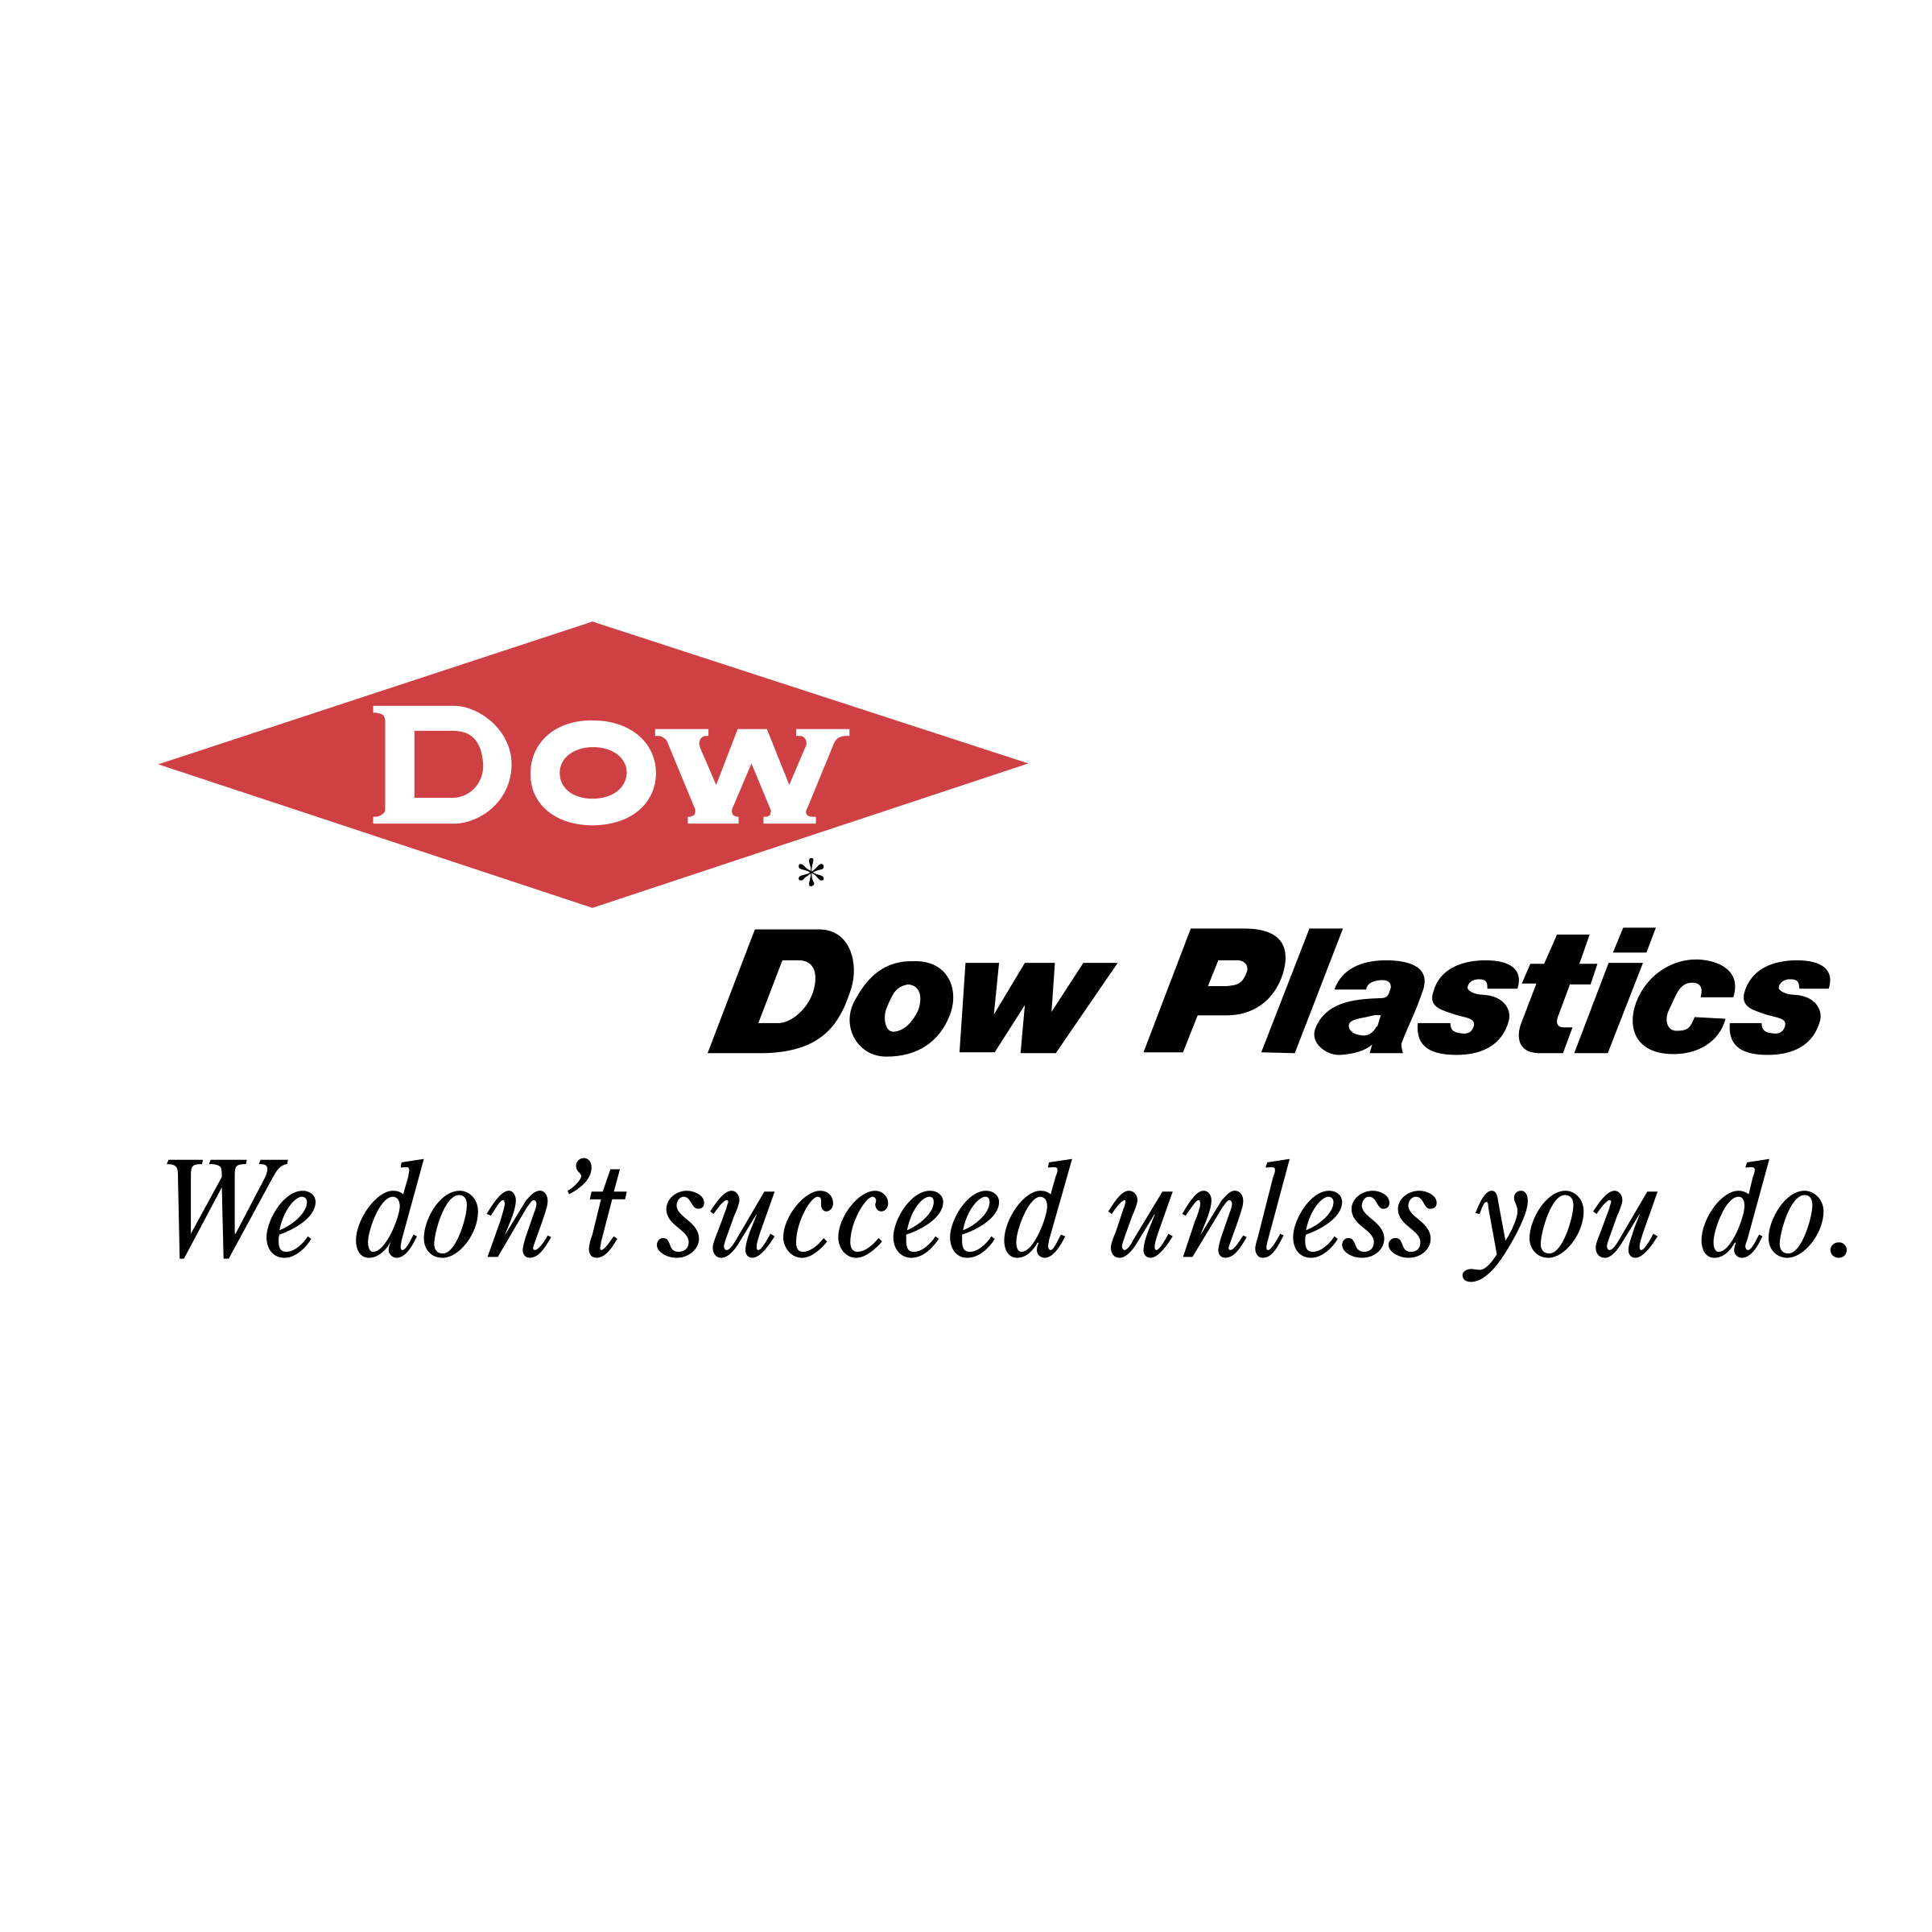 Dow Logo - Dow Logo PNG Transparent & SVG Vector - Freebie Supply